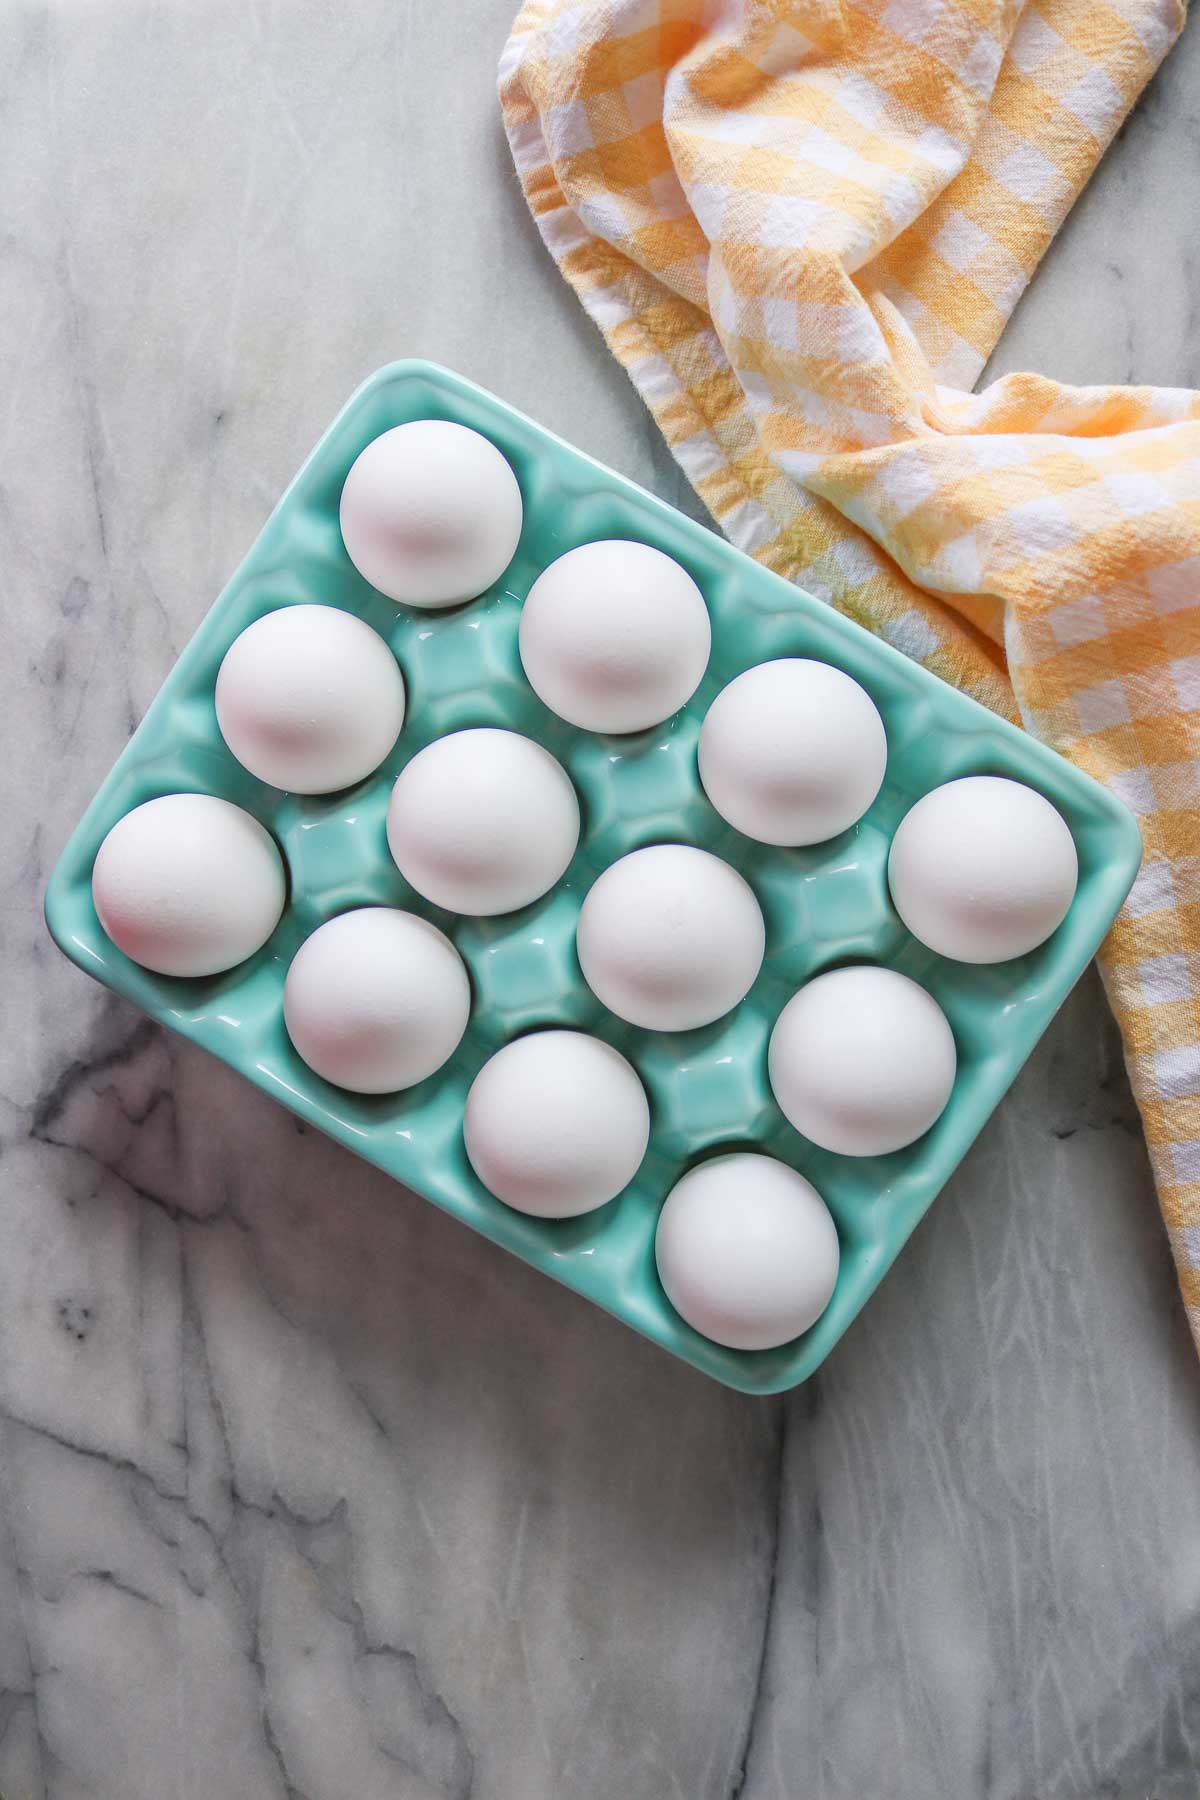 Twelve whole eggs in a glass carton.